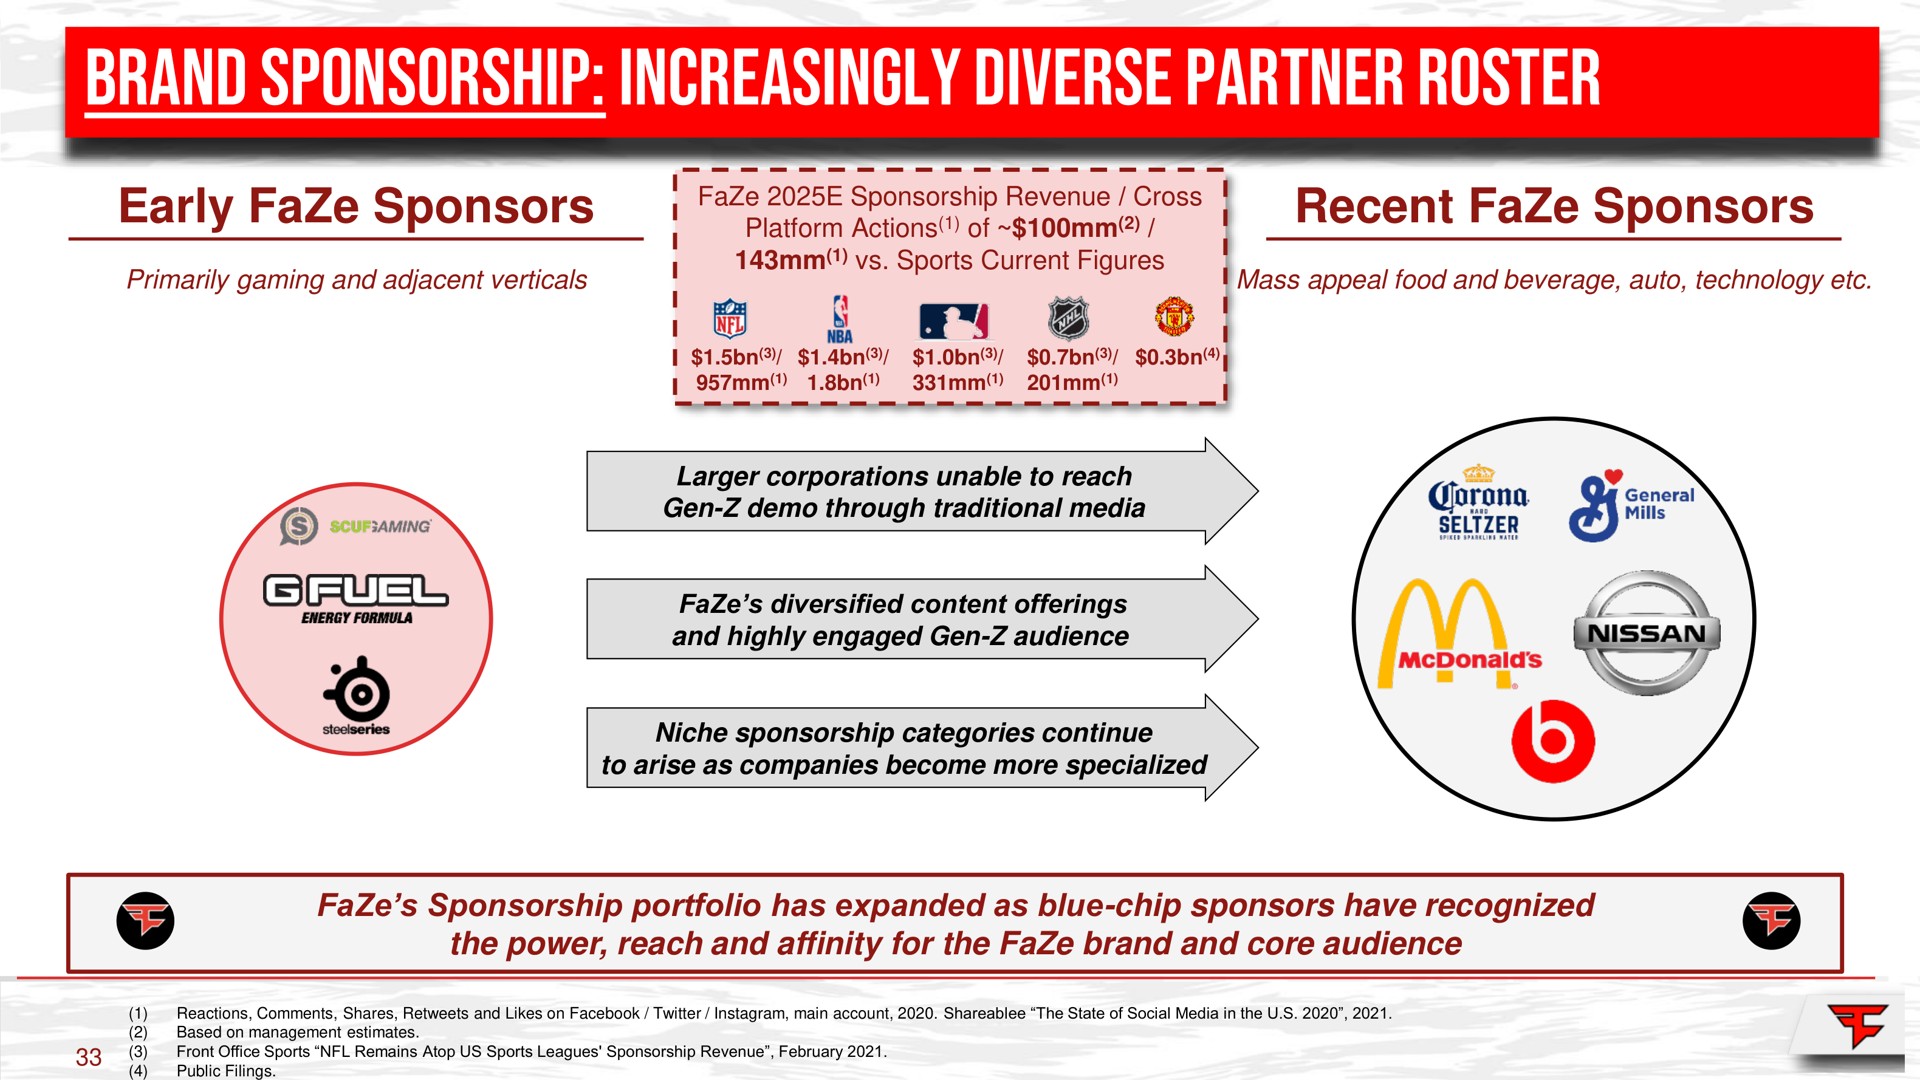 brand sponsorship increasingly diverse partner roster early faze sponsors recent faze sponsors | FaZe